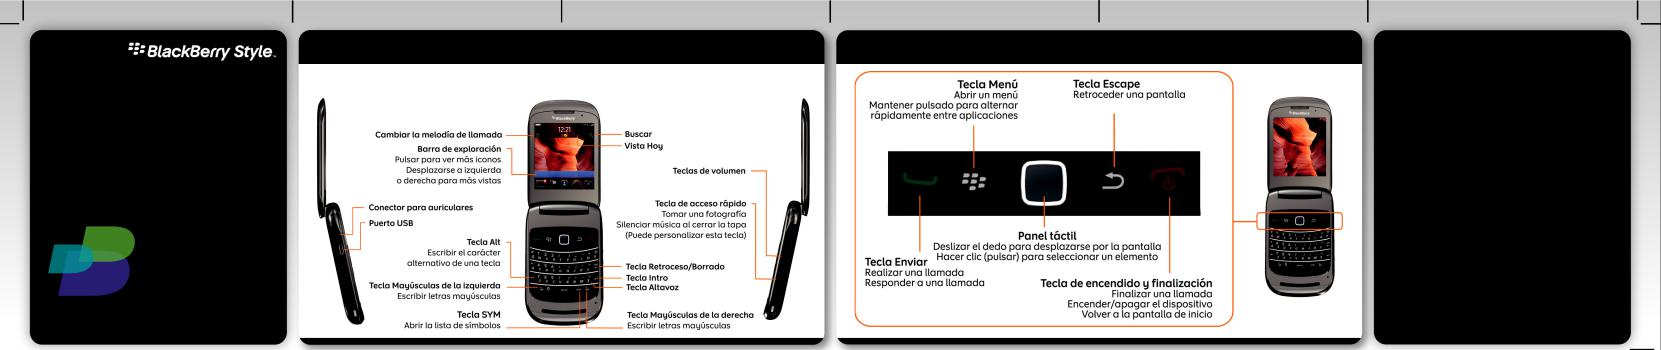 BlackBerry Style 9670 User Manual